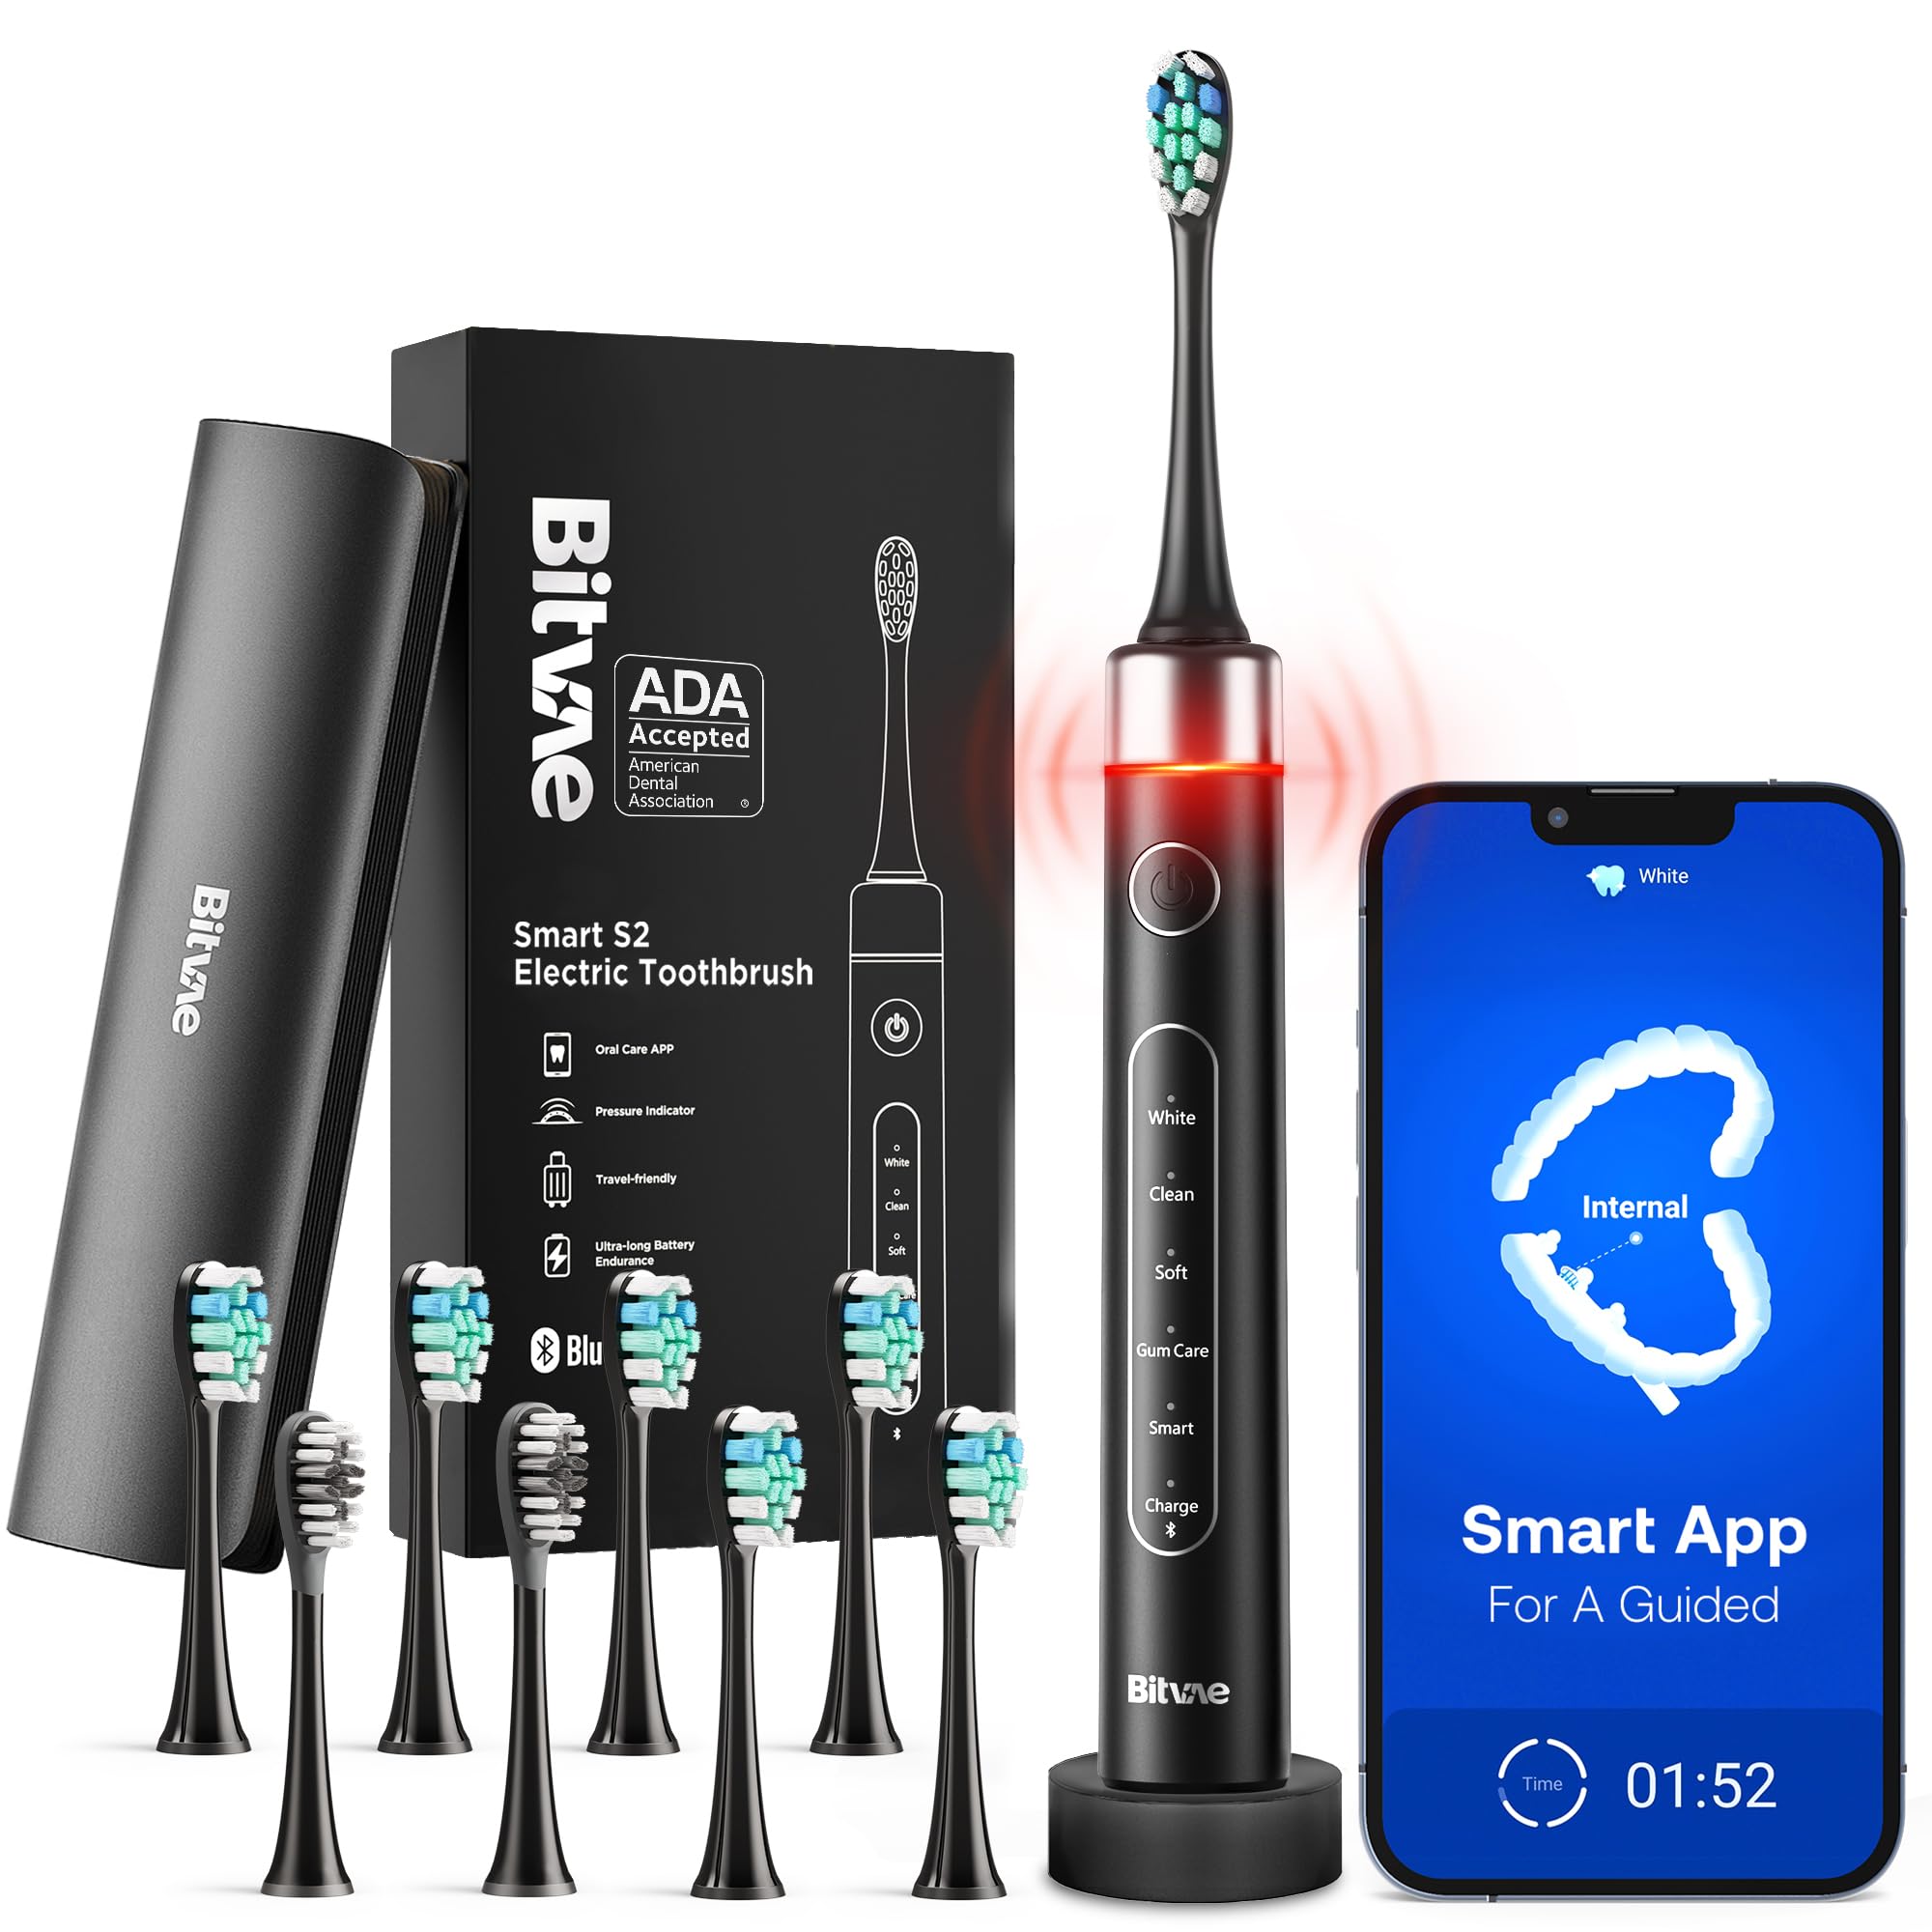 Bitvae Smart Ultrasonic Whitening Electric Toothbrush with 8 Brush Heads -  Black SmartS2 $12.49